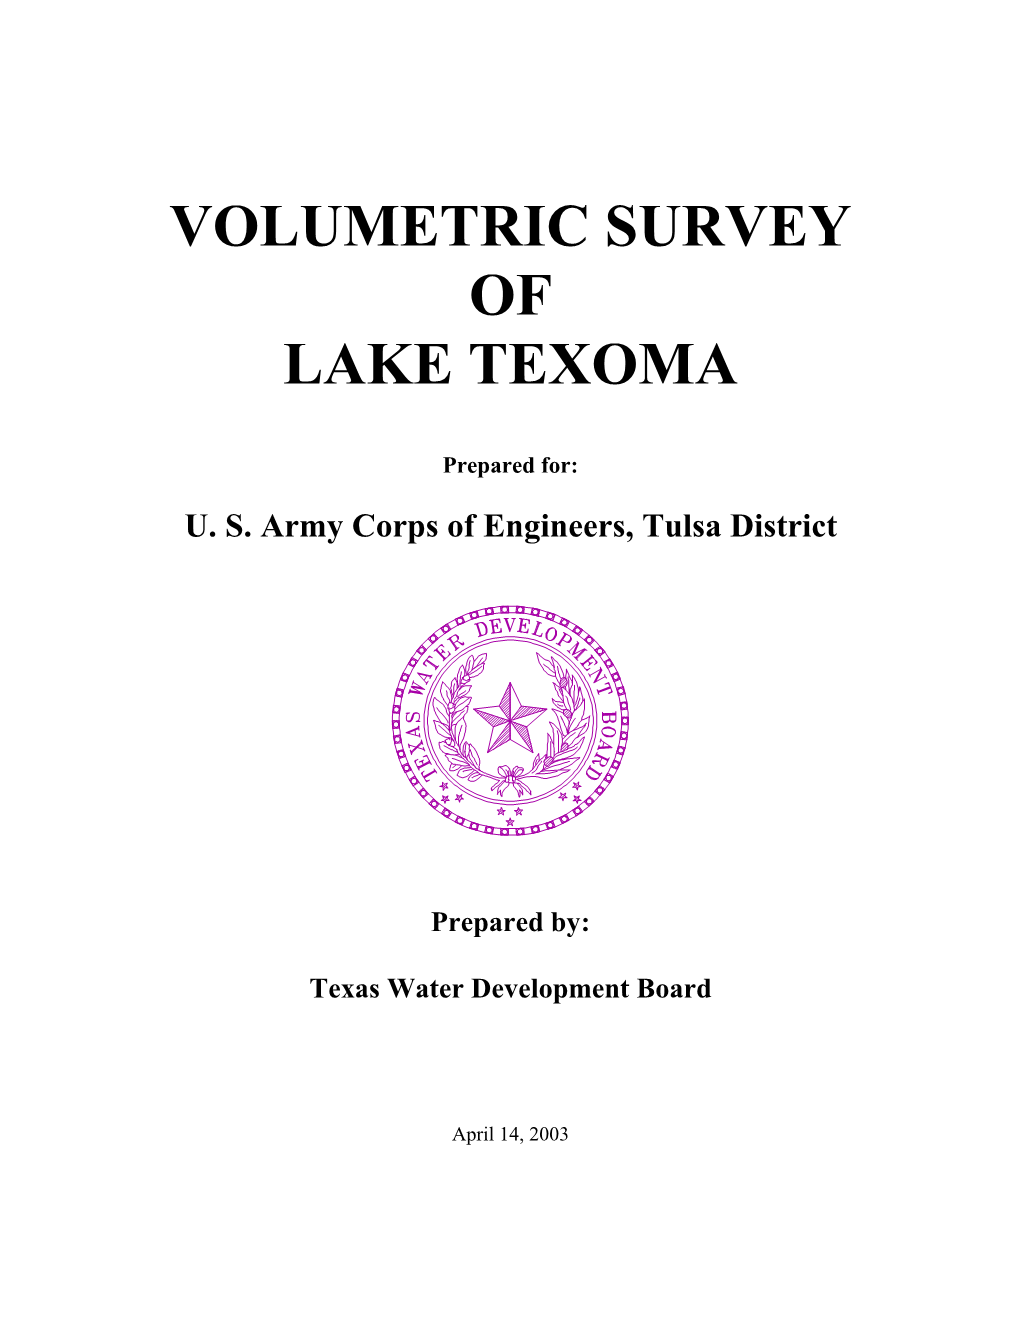 Volumetric Survey of Lake Texoma Performed by the TWDB